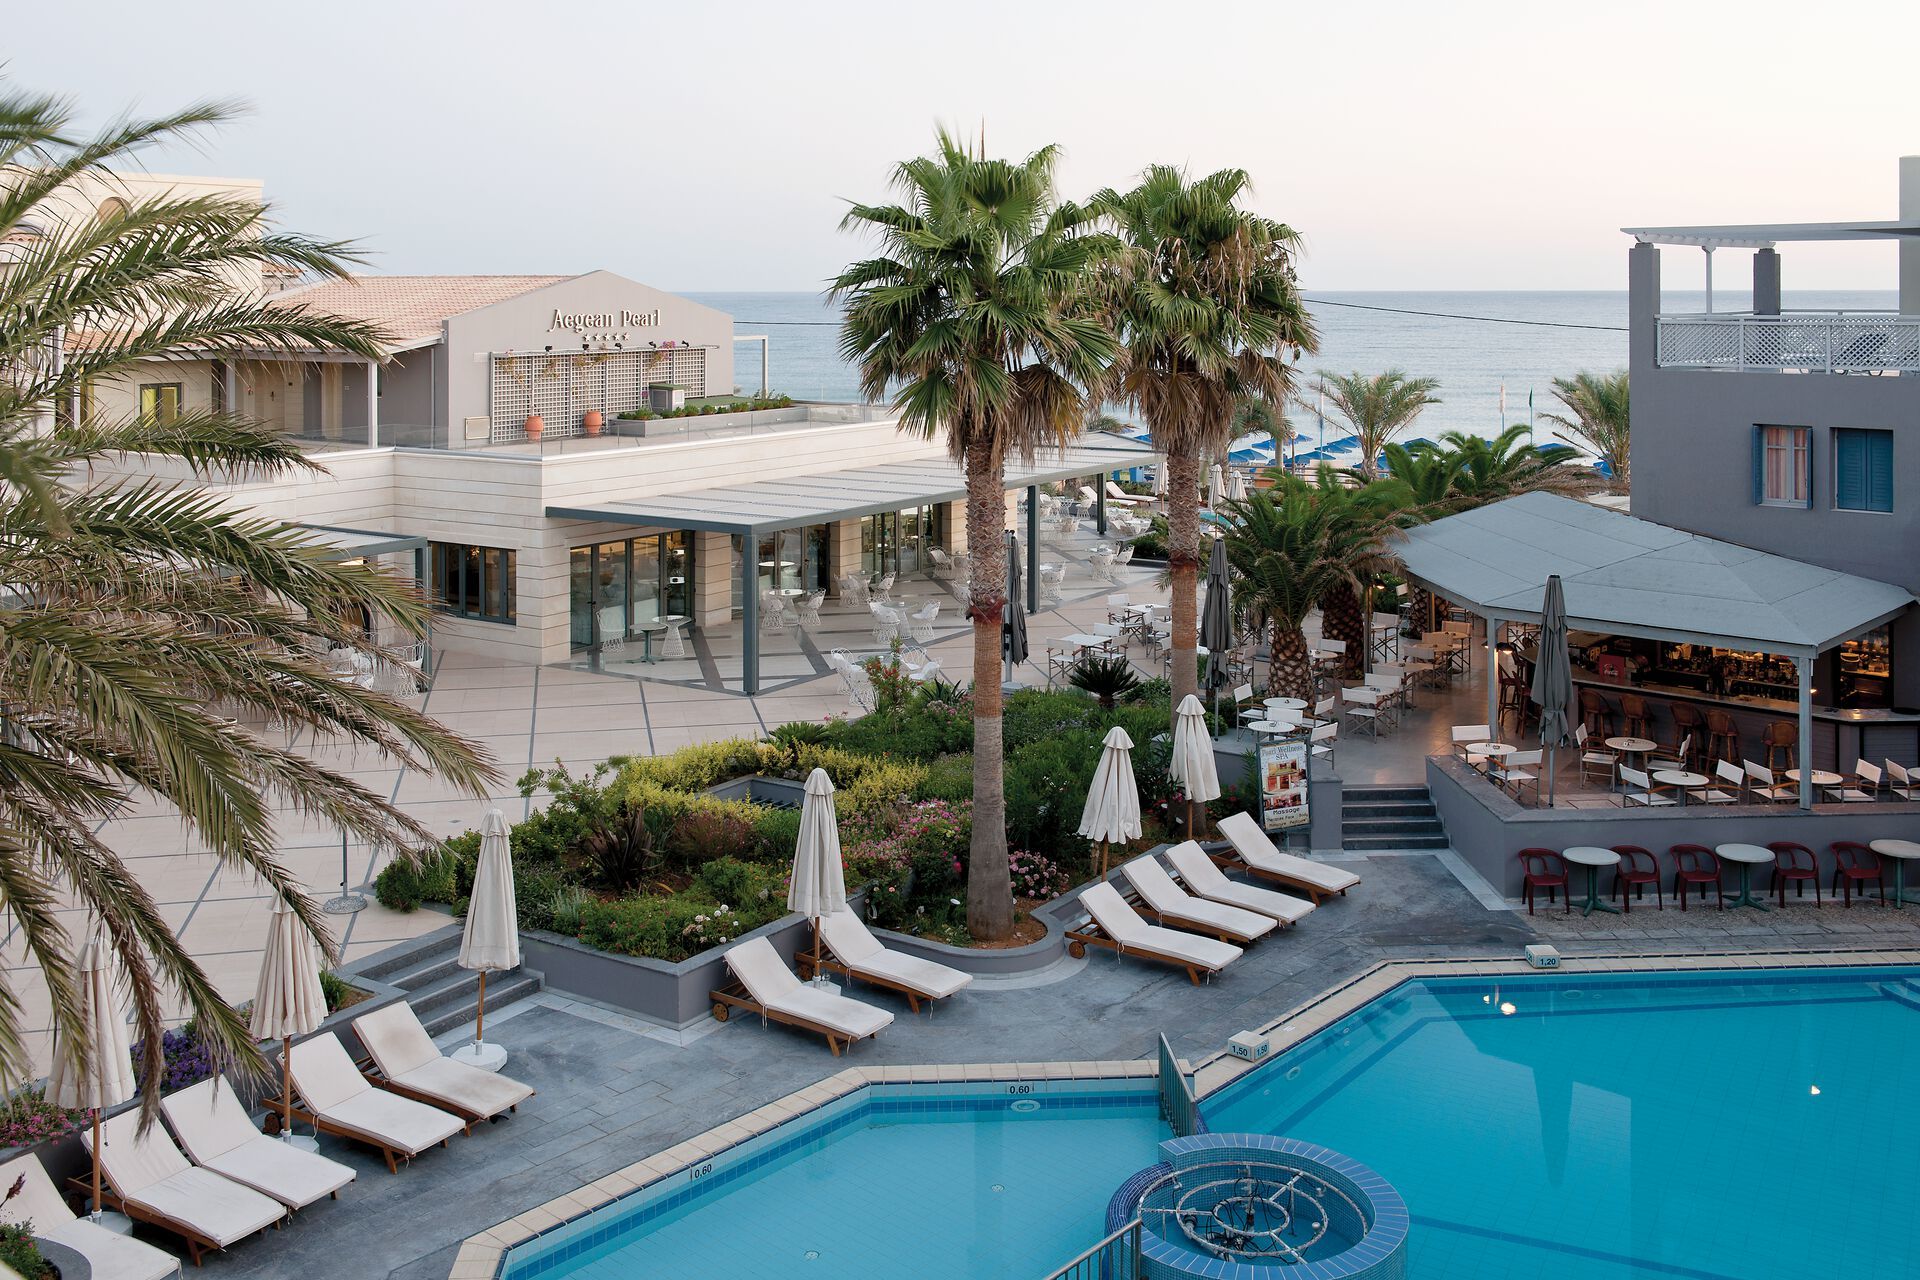 Crète - Rethymnon - Grèce - Iles grecques - Hotel Sentido Aegean Pearl 5*